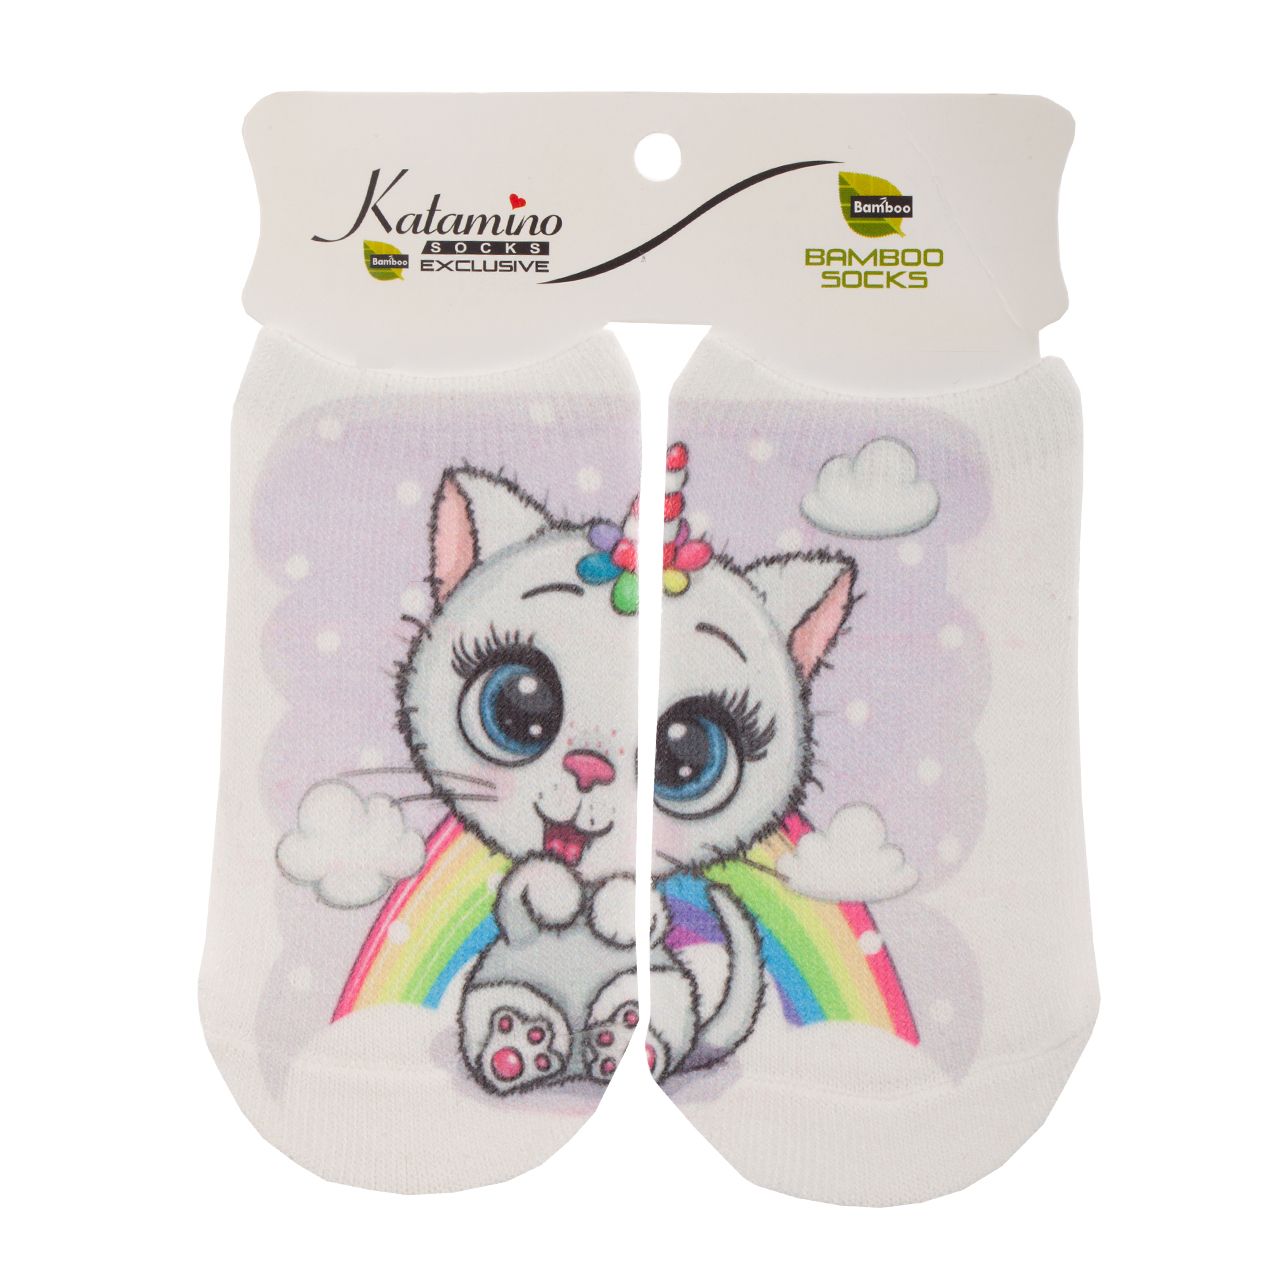  جوراب نوزاد کاتامینو طرح گربه ملوس  -  - 1